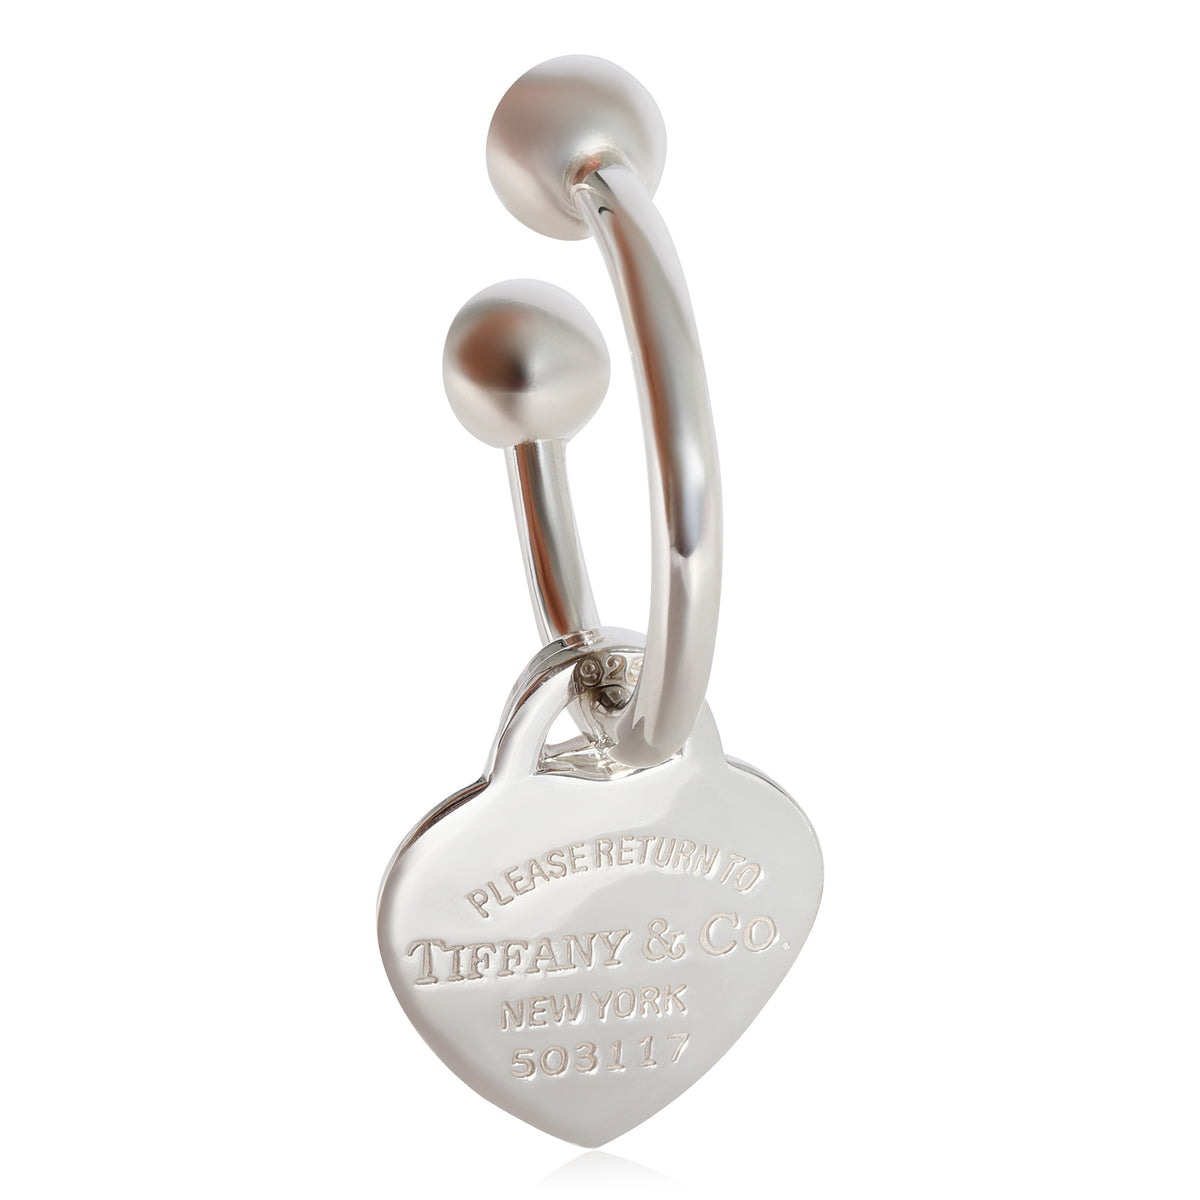 Tiffany & Co. Return to Tiffany Key Ring in  Sterling Silver